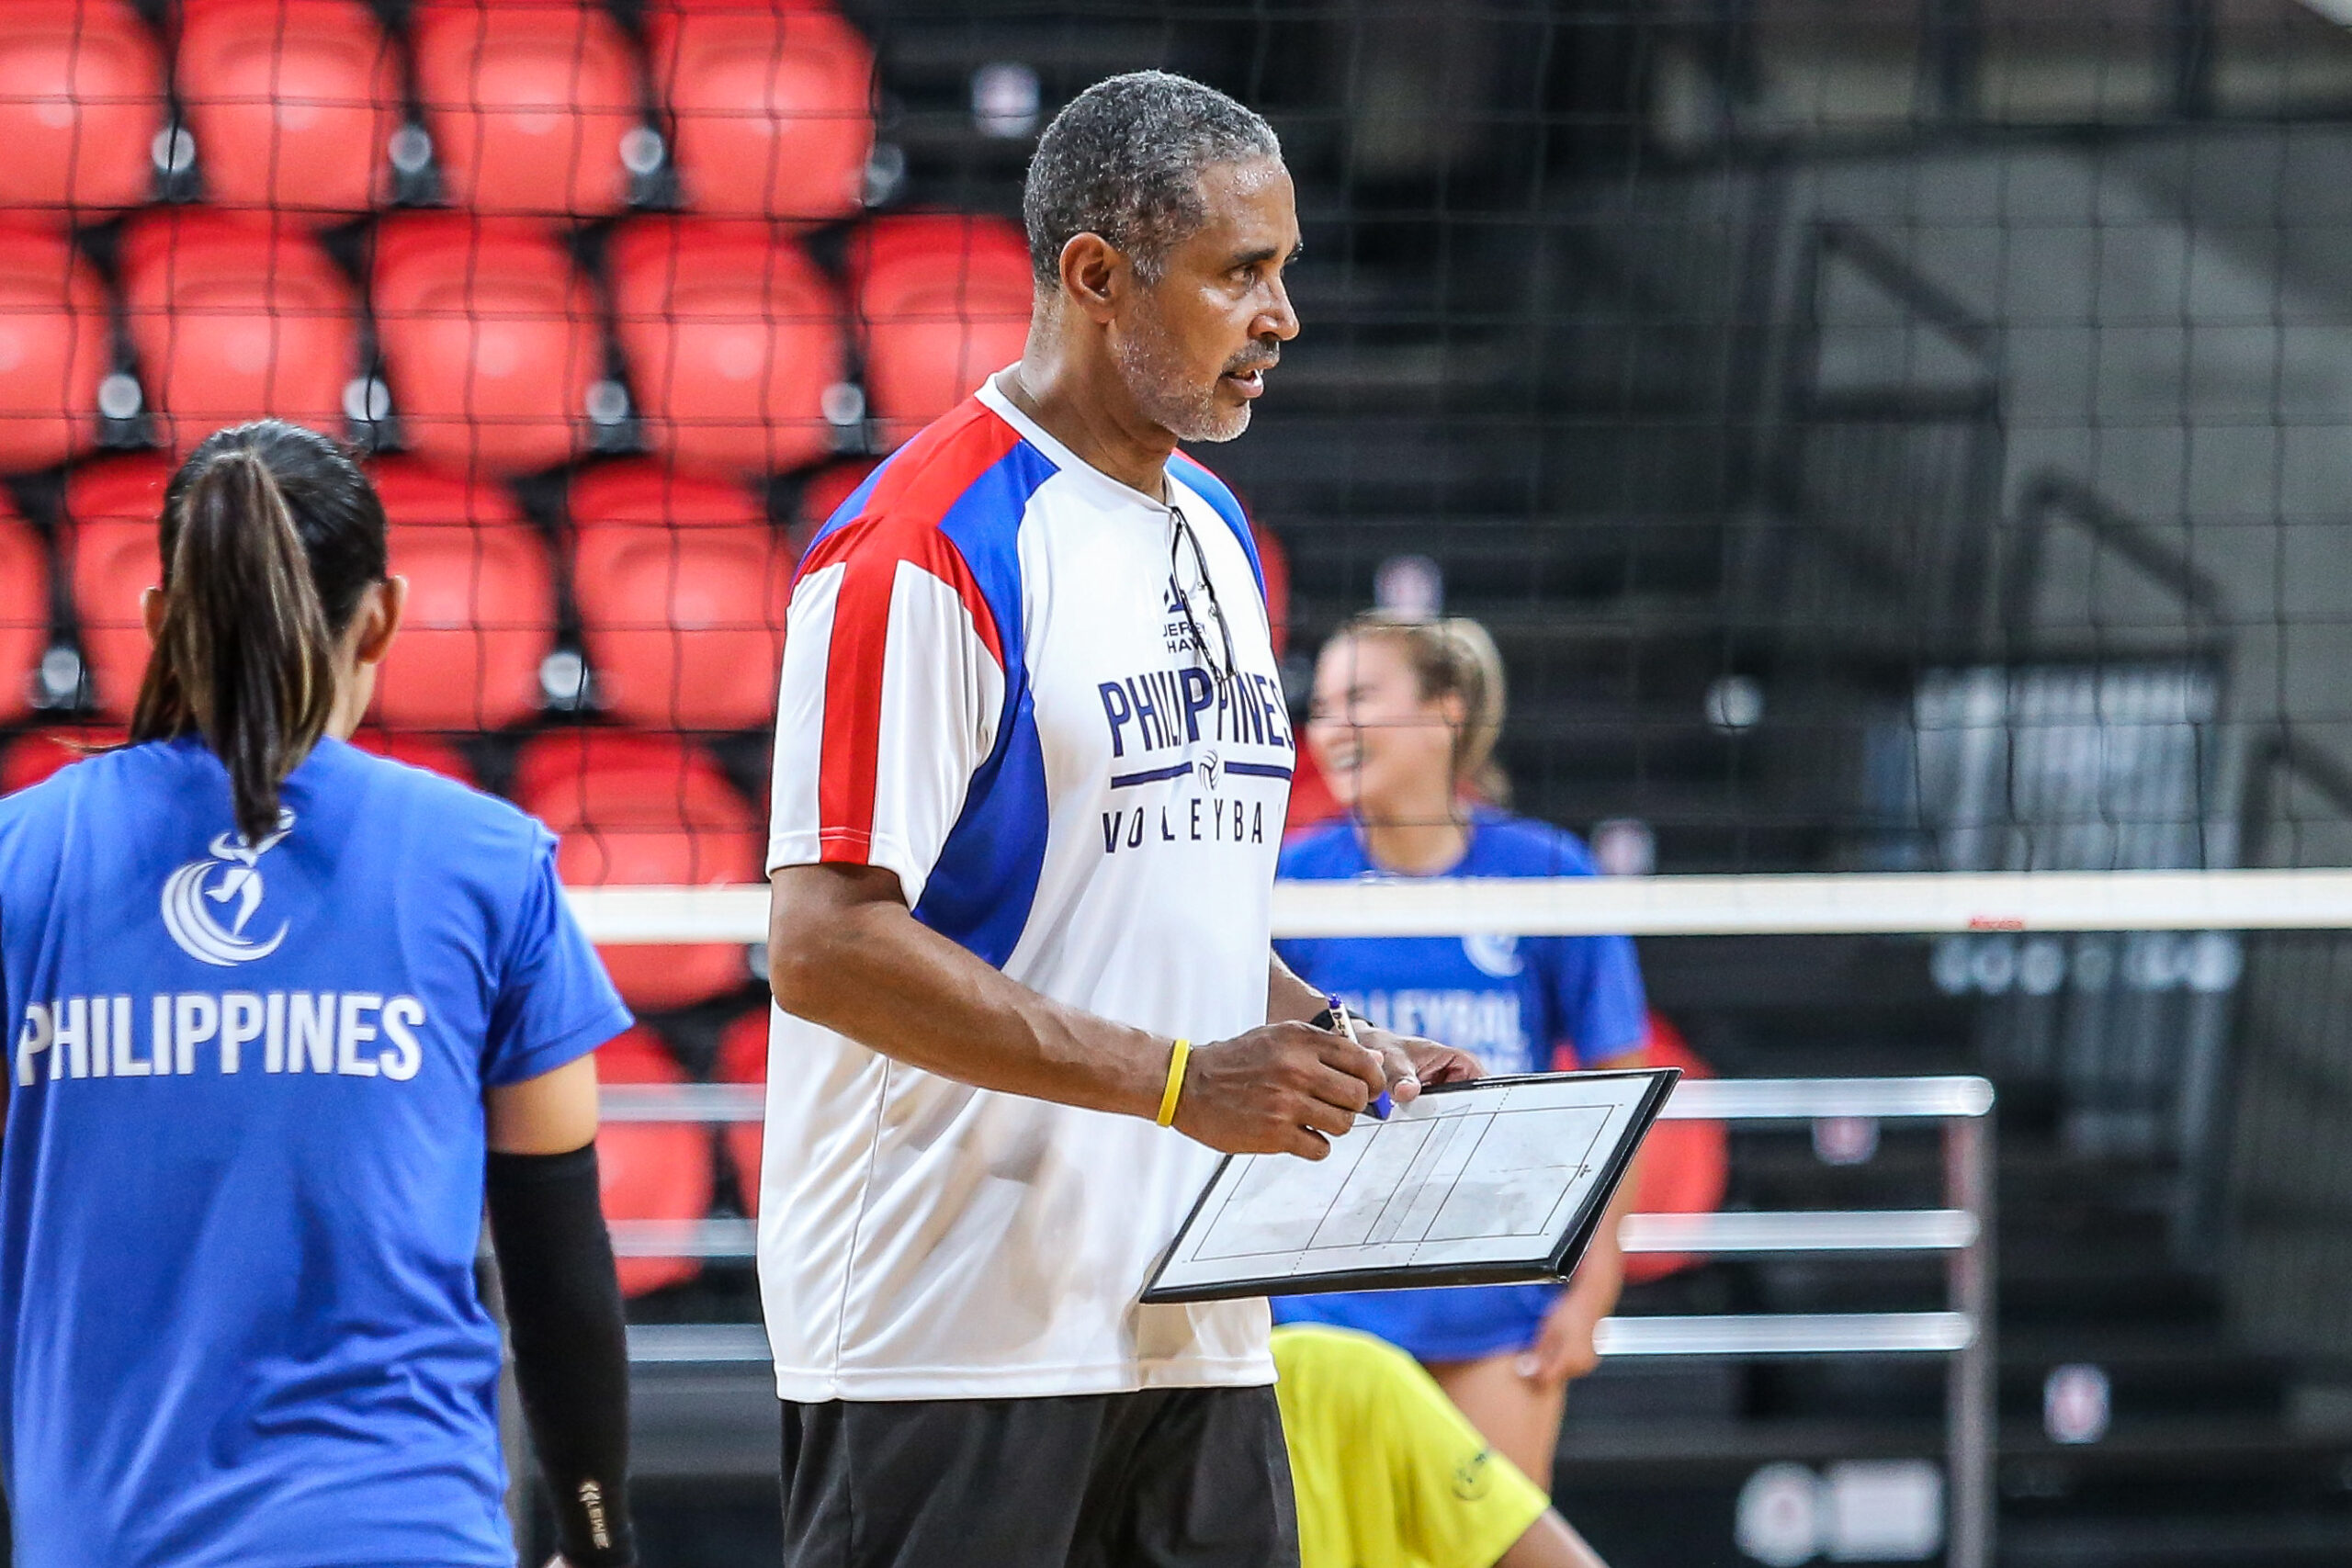 Philippine women's national volleyball team coach Jorge Souza de Brito